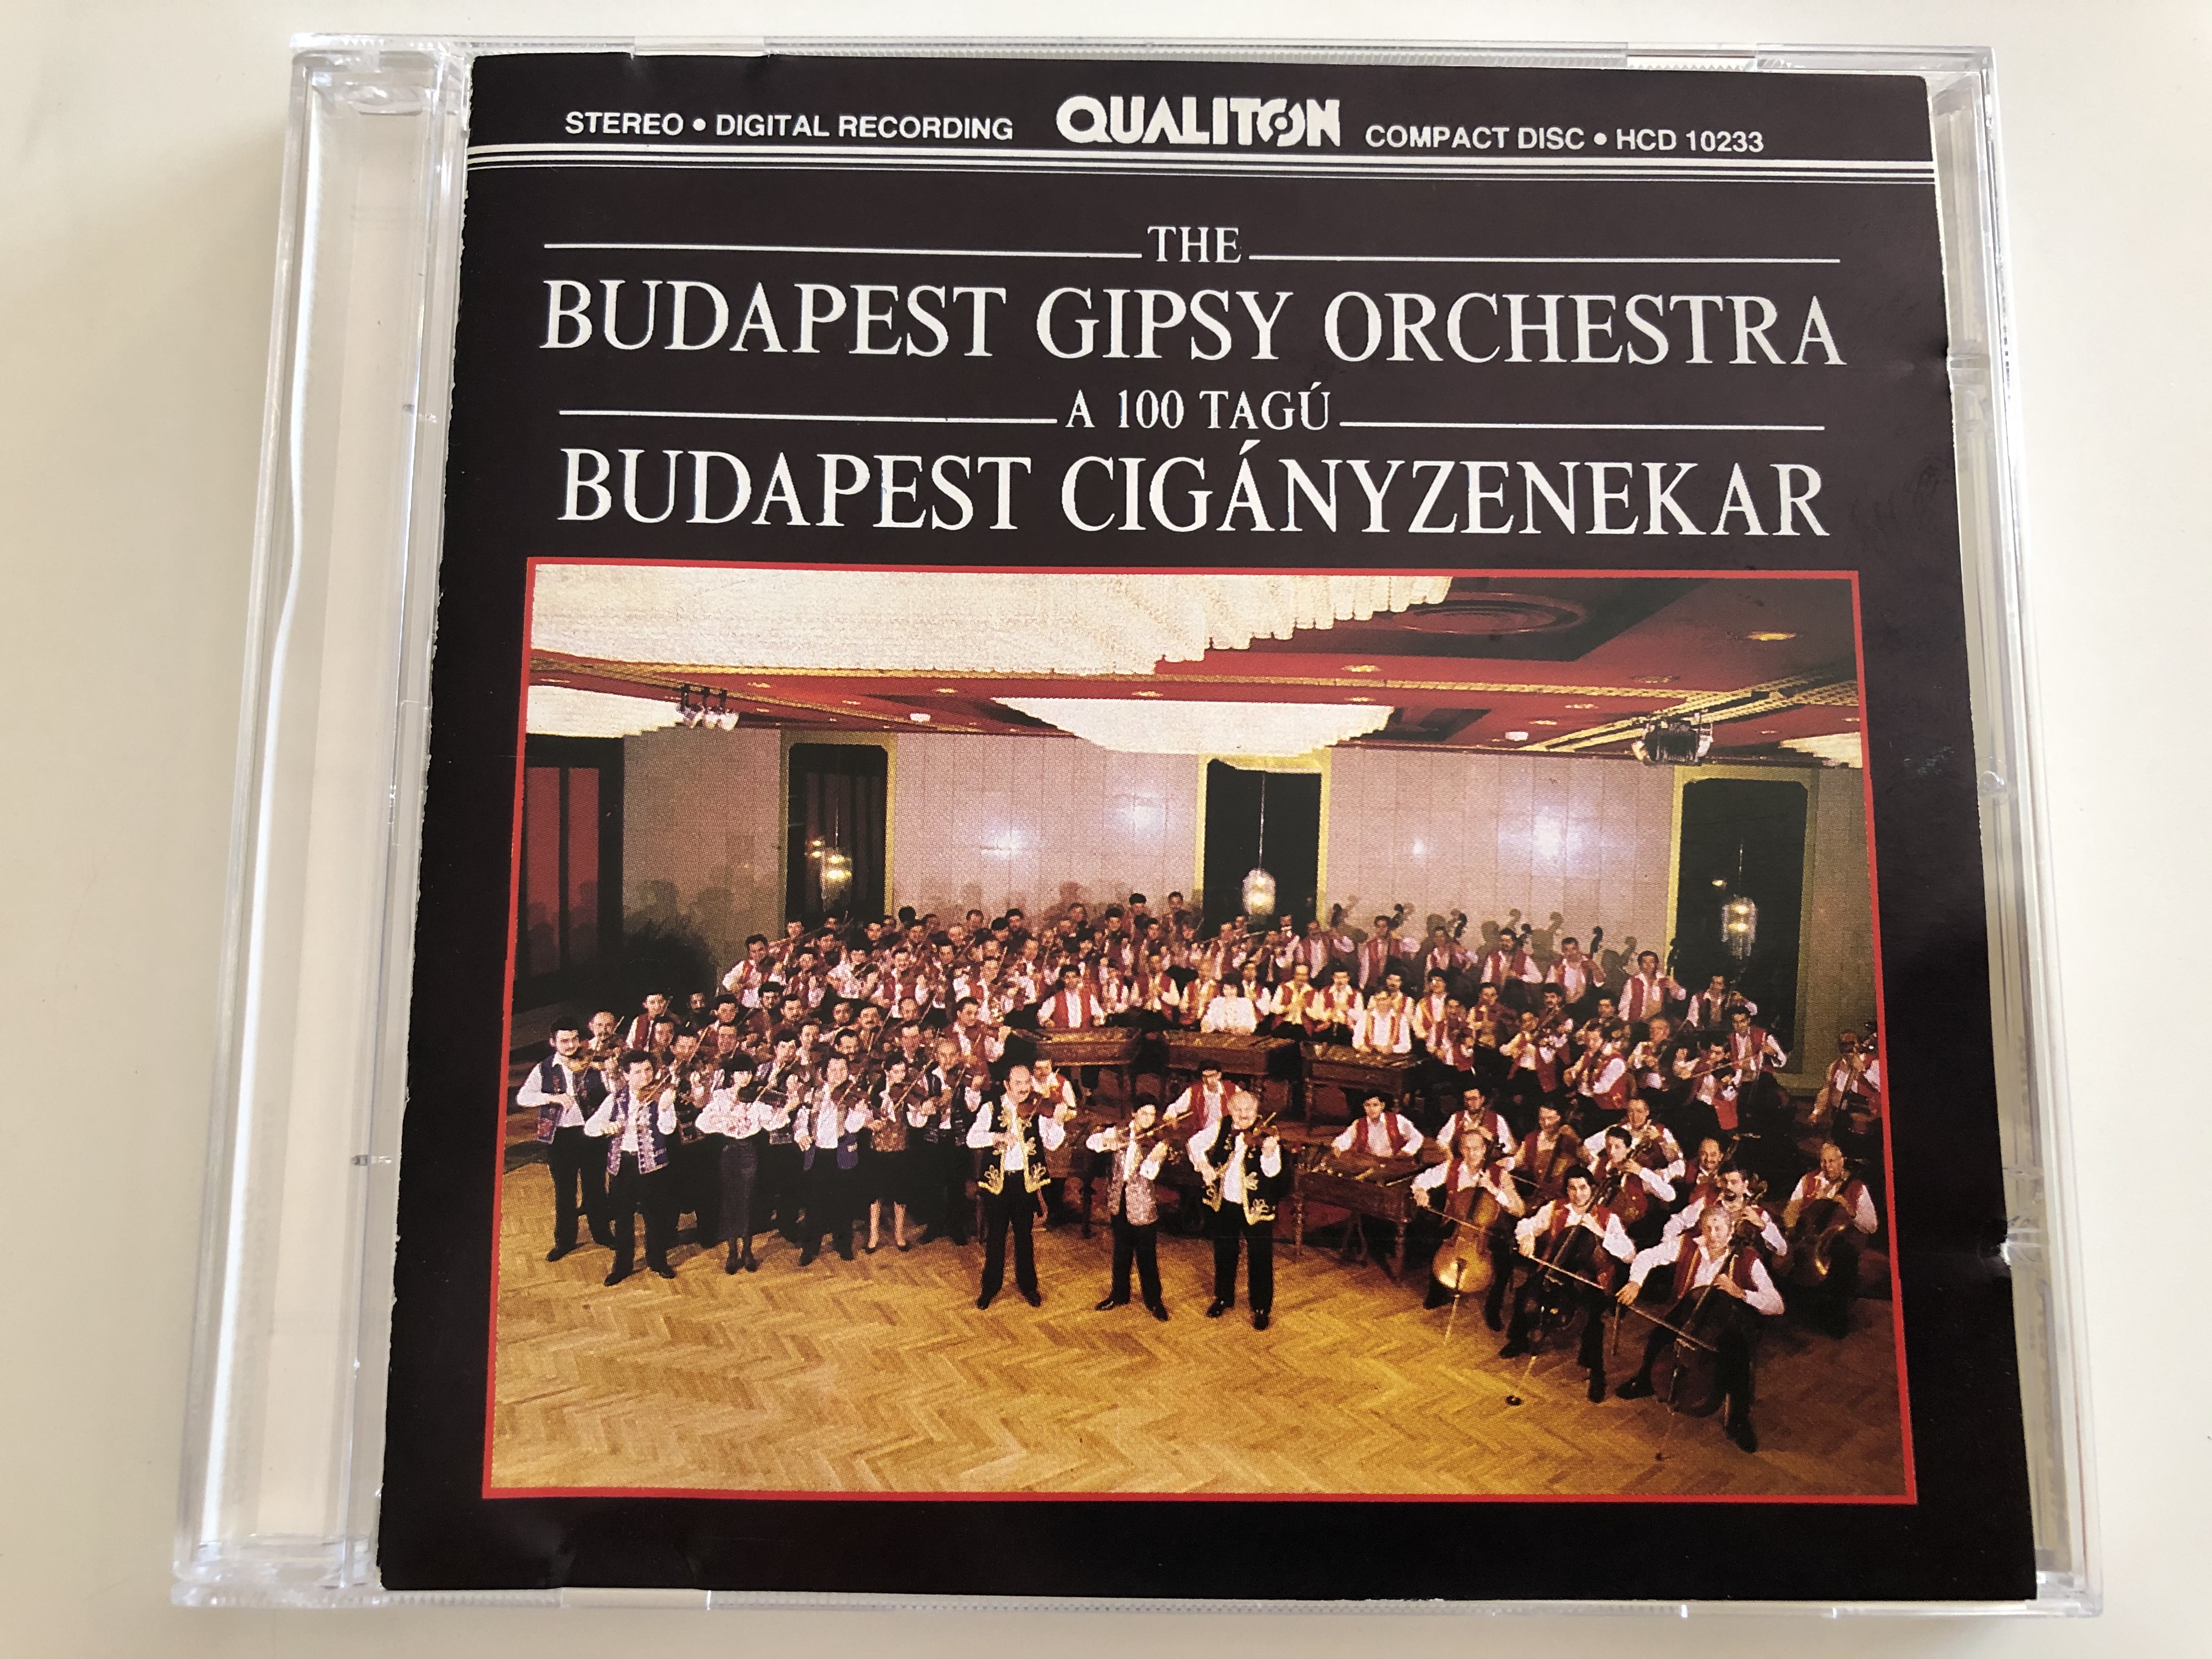 the-budapest-gipsy-orchestra-a-100-tagu-budapest-ciganyzenekar-qualiton-audio-cd-1989-stereo-hcd-10233-1-.jpg